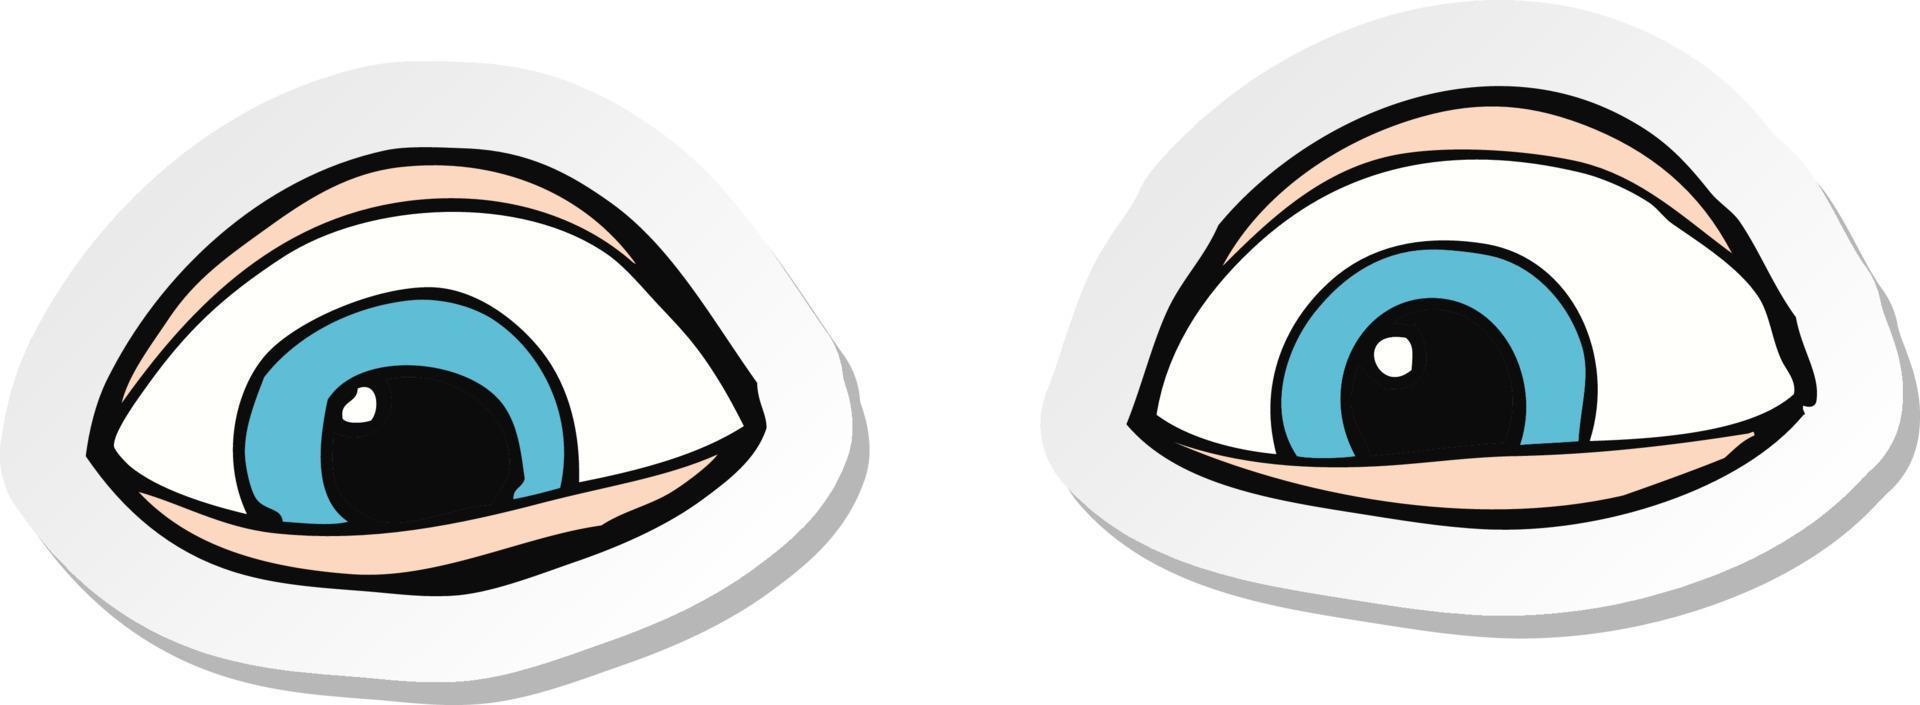 pegatina de ojos de dibujos animados vector